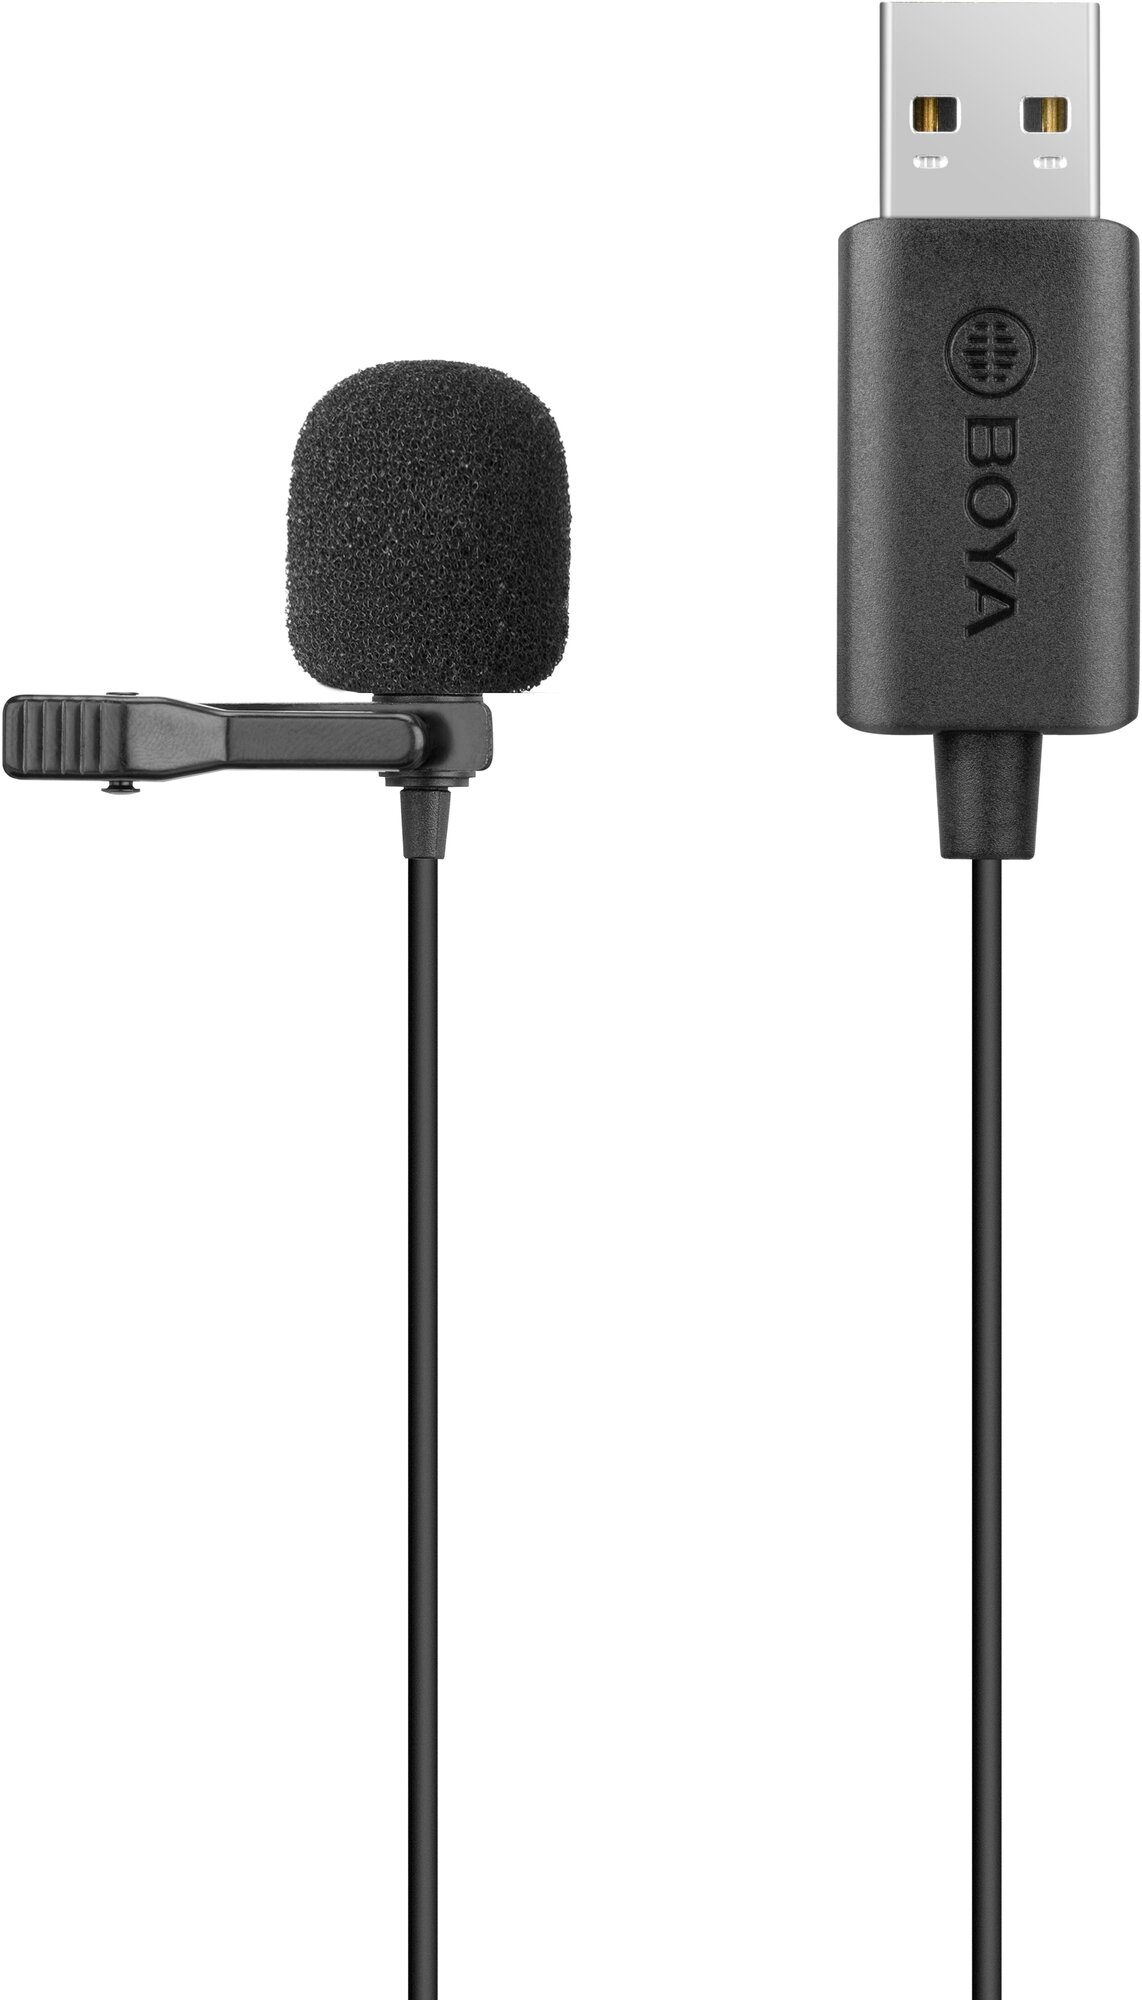 Петличный USB микрофон Boya BY-LM40 (для ПК) 1699